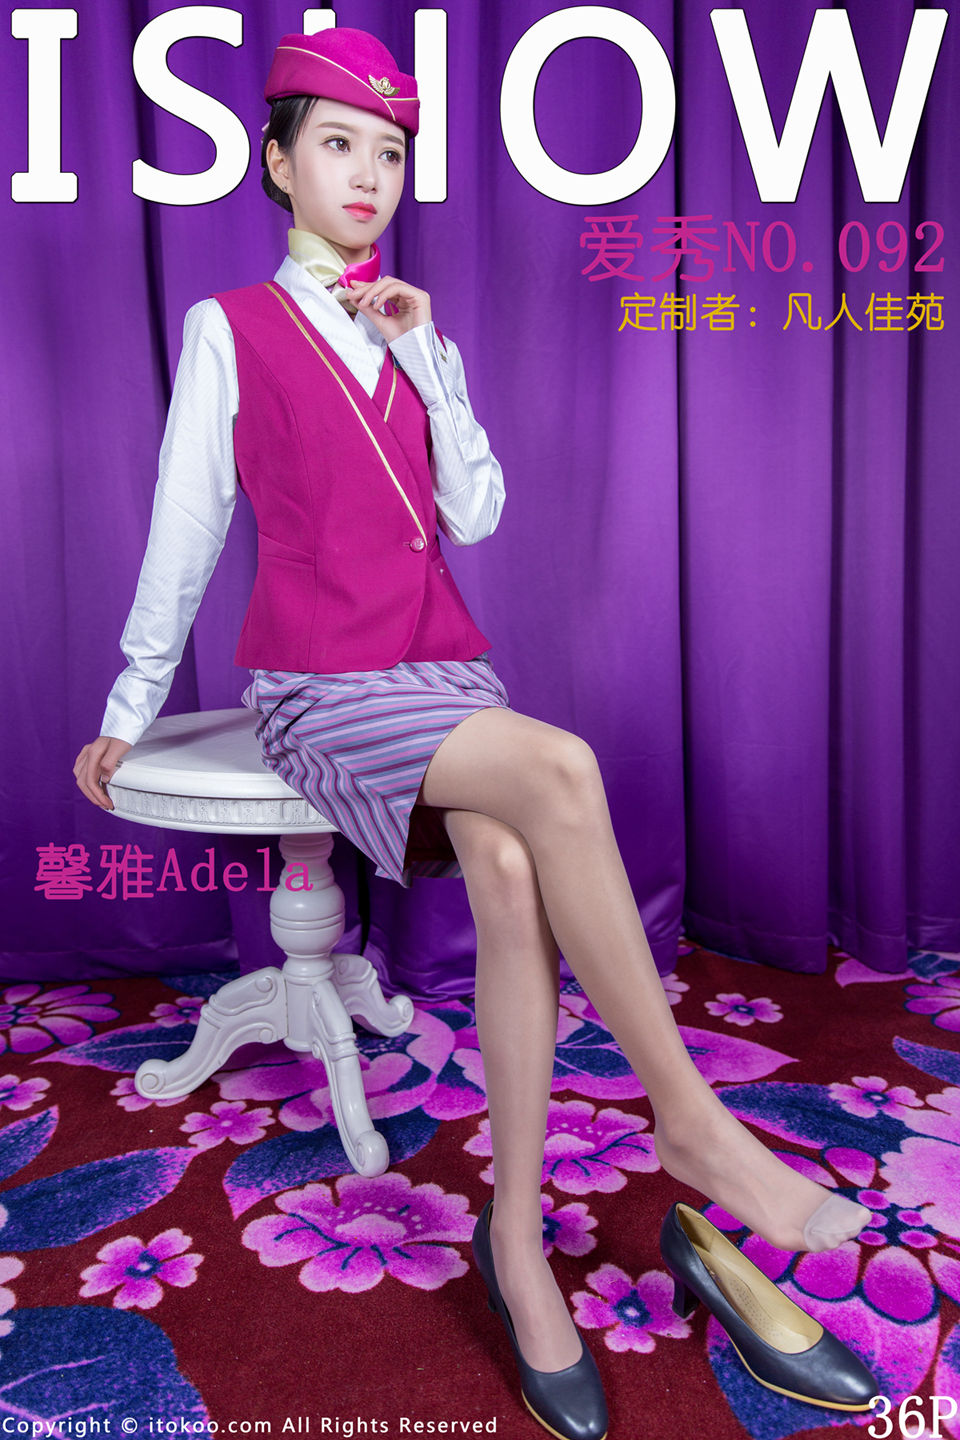 [IShow]爱秀 NO.092 馨雅Adela (1).jpg